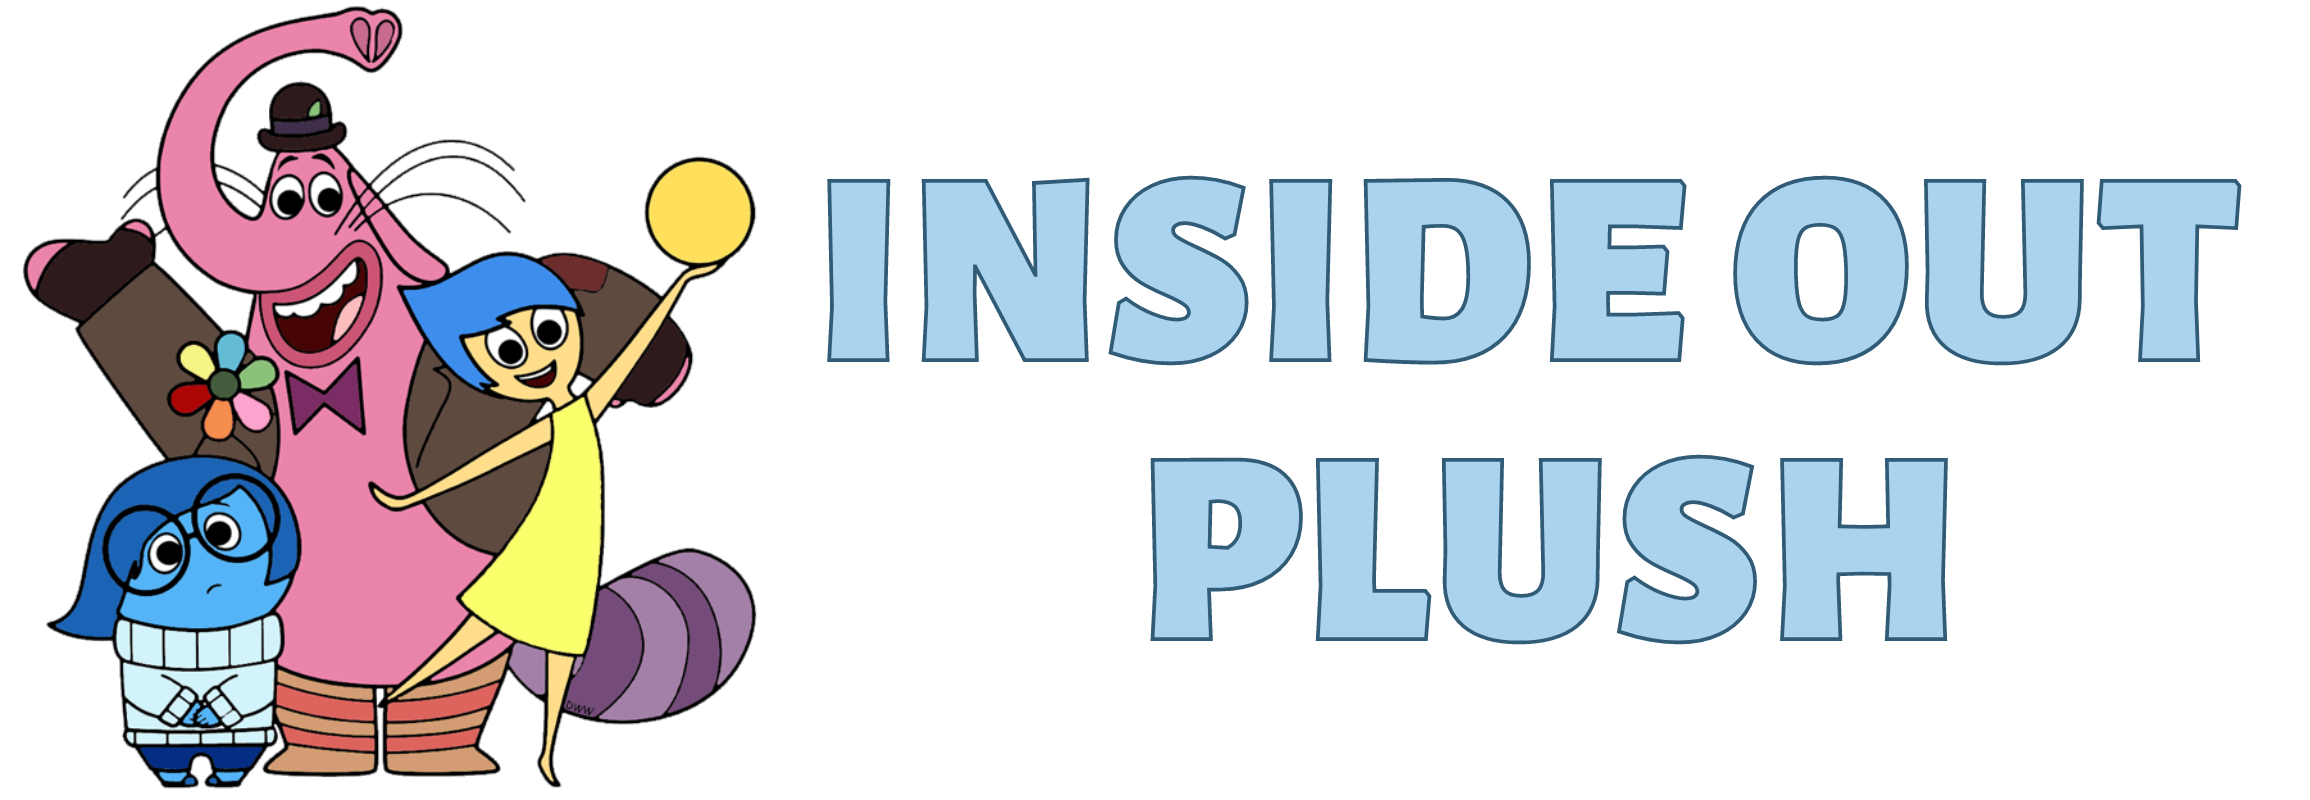 inside out plush logo1 - Inside Out Plush